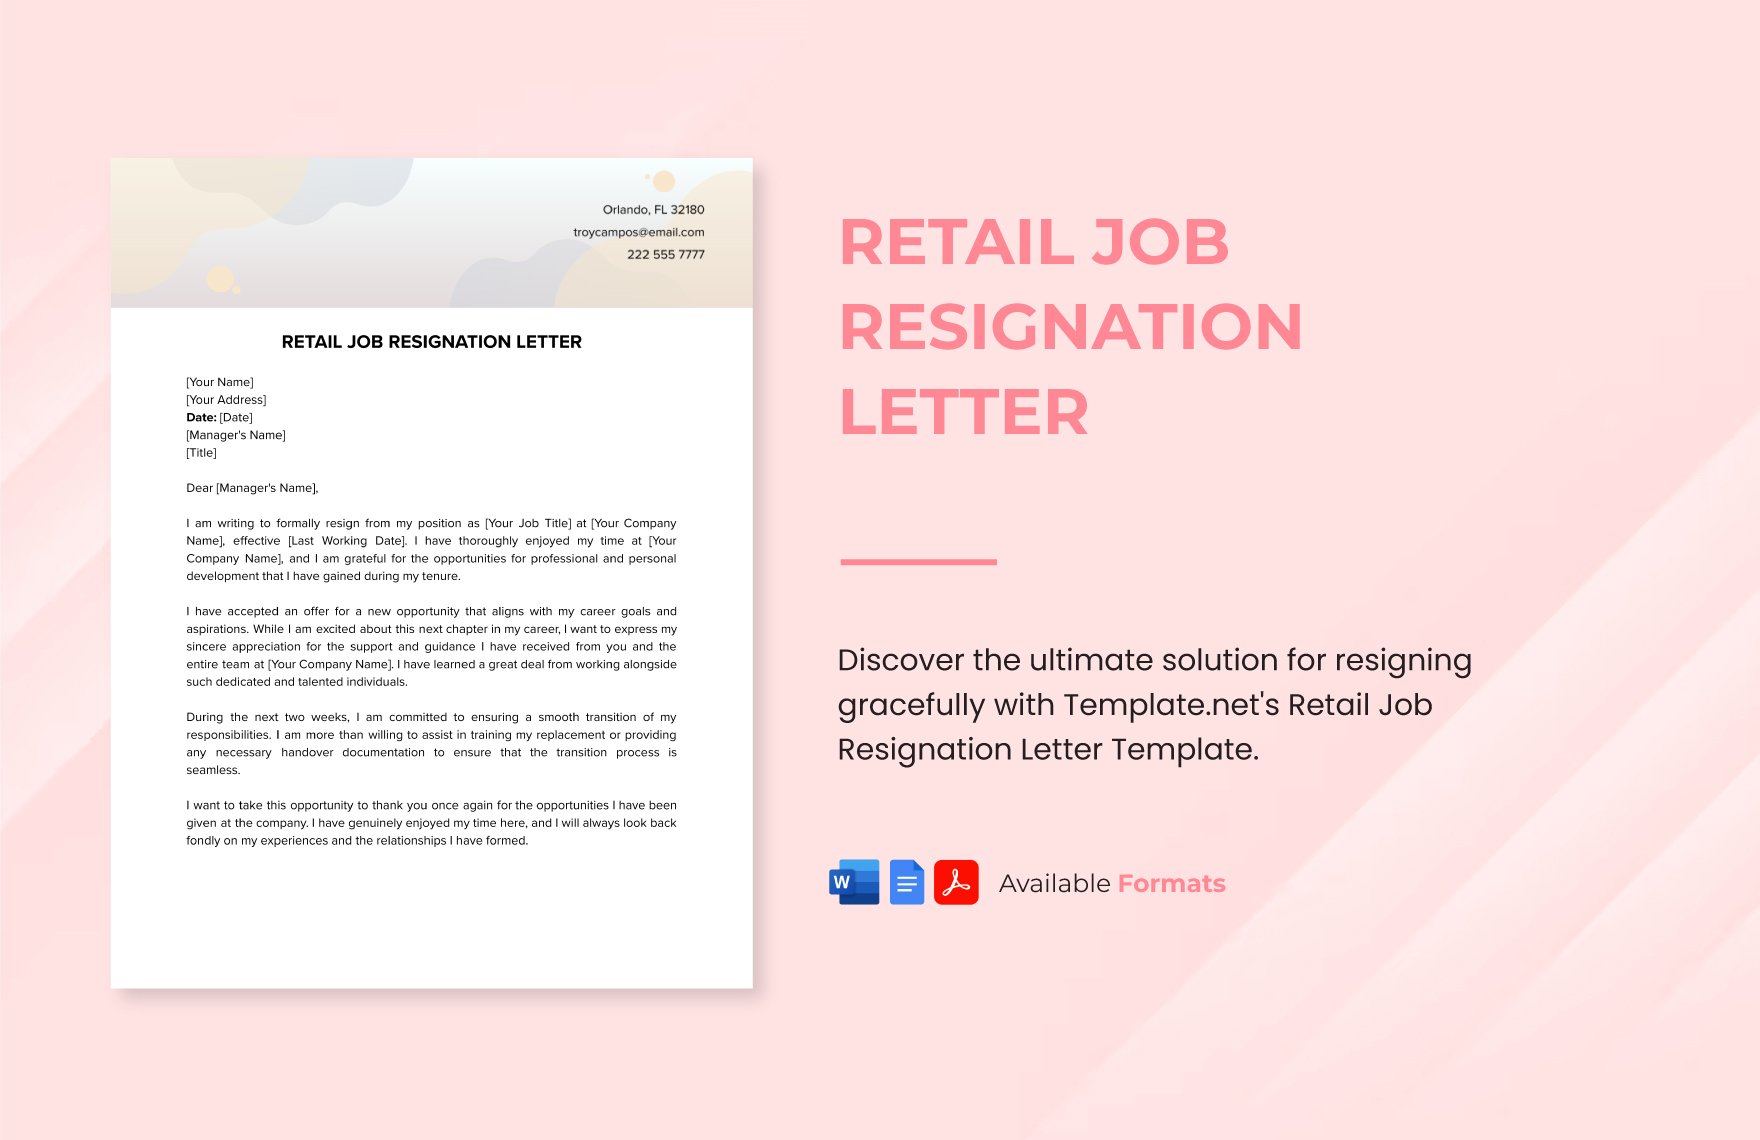 Retail Job Resignation Letter Template in Word, Google Docs, PDF